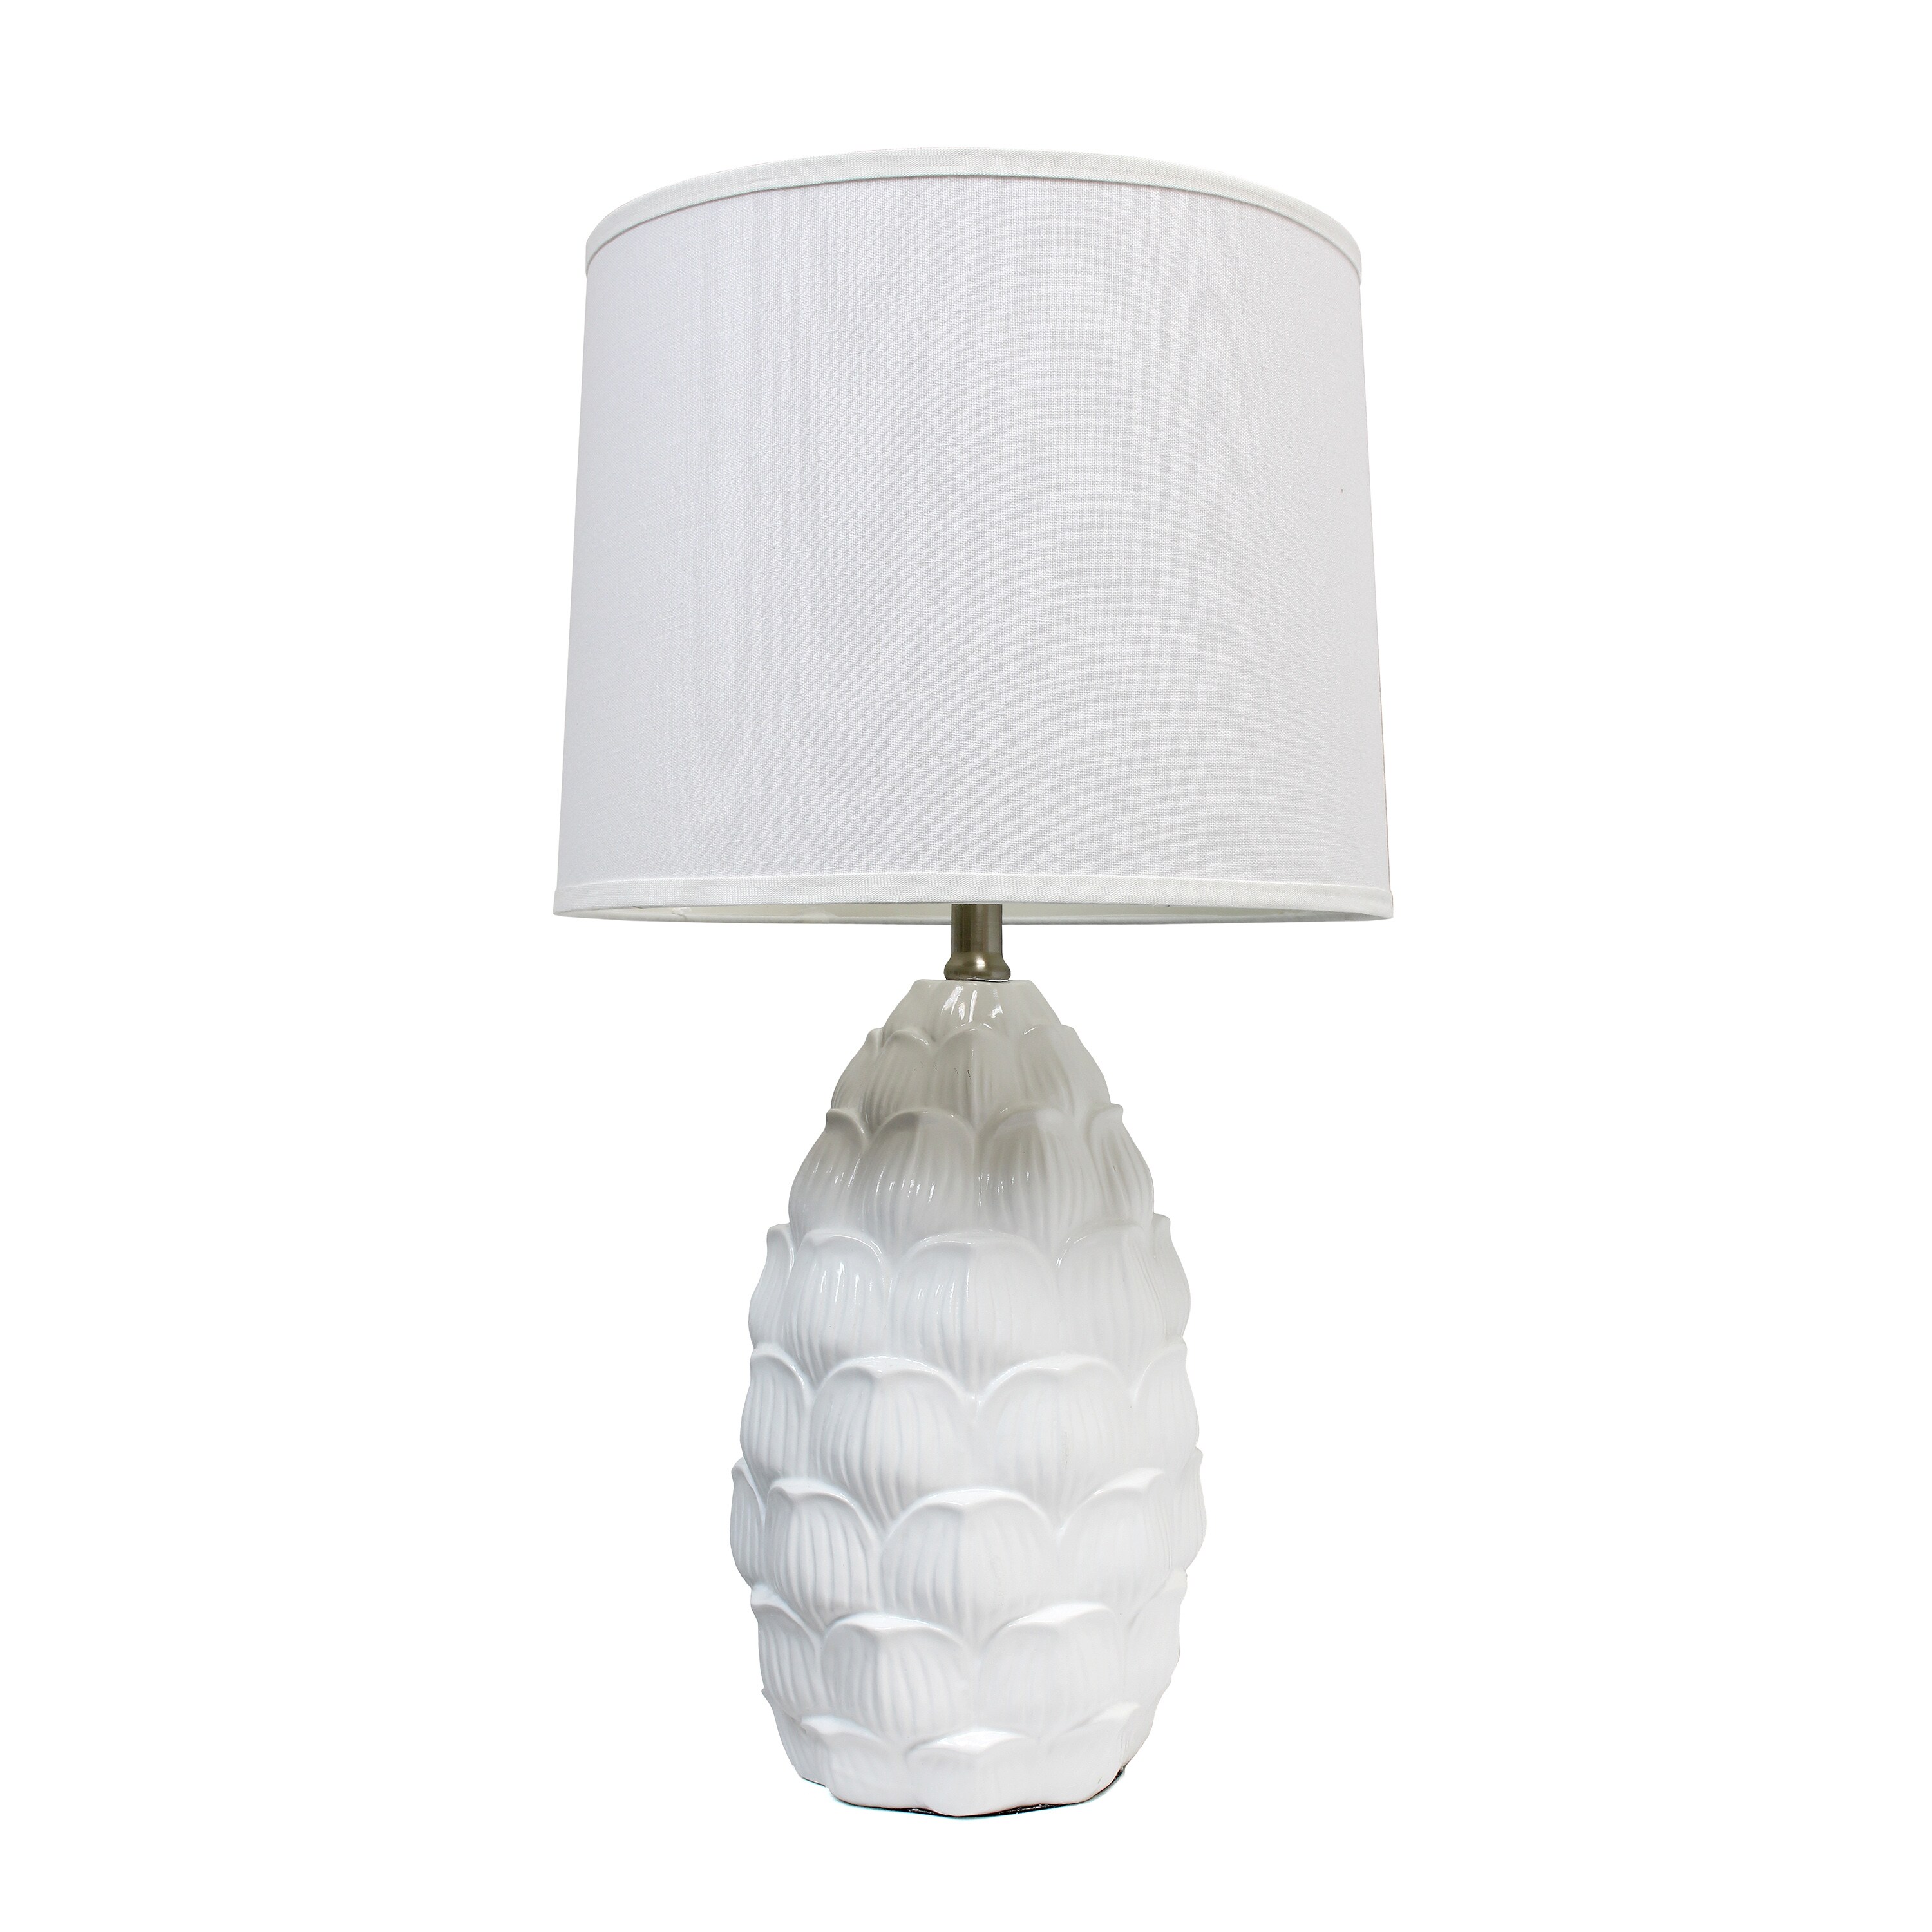 StyleCraft Mini Ardichoke Table Lamp - Off-White